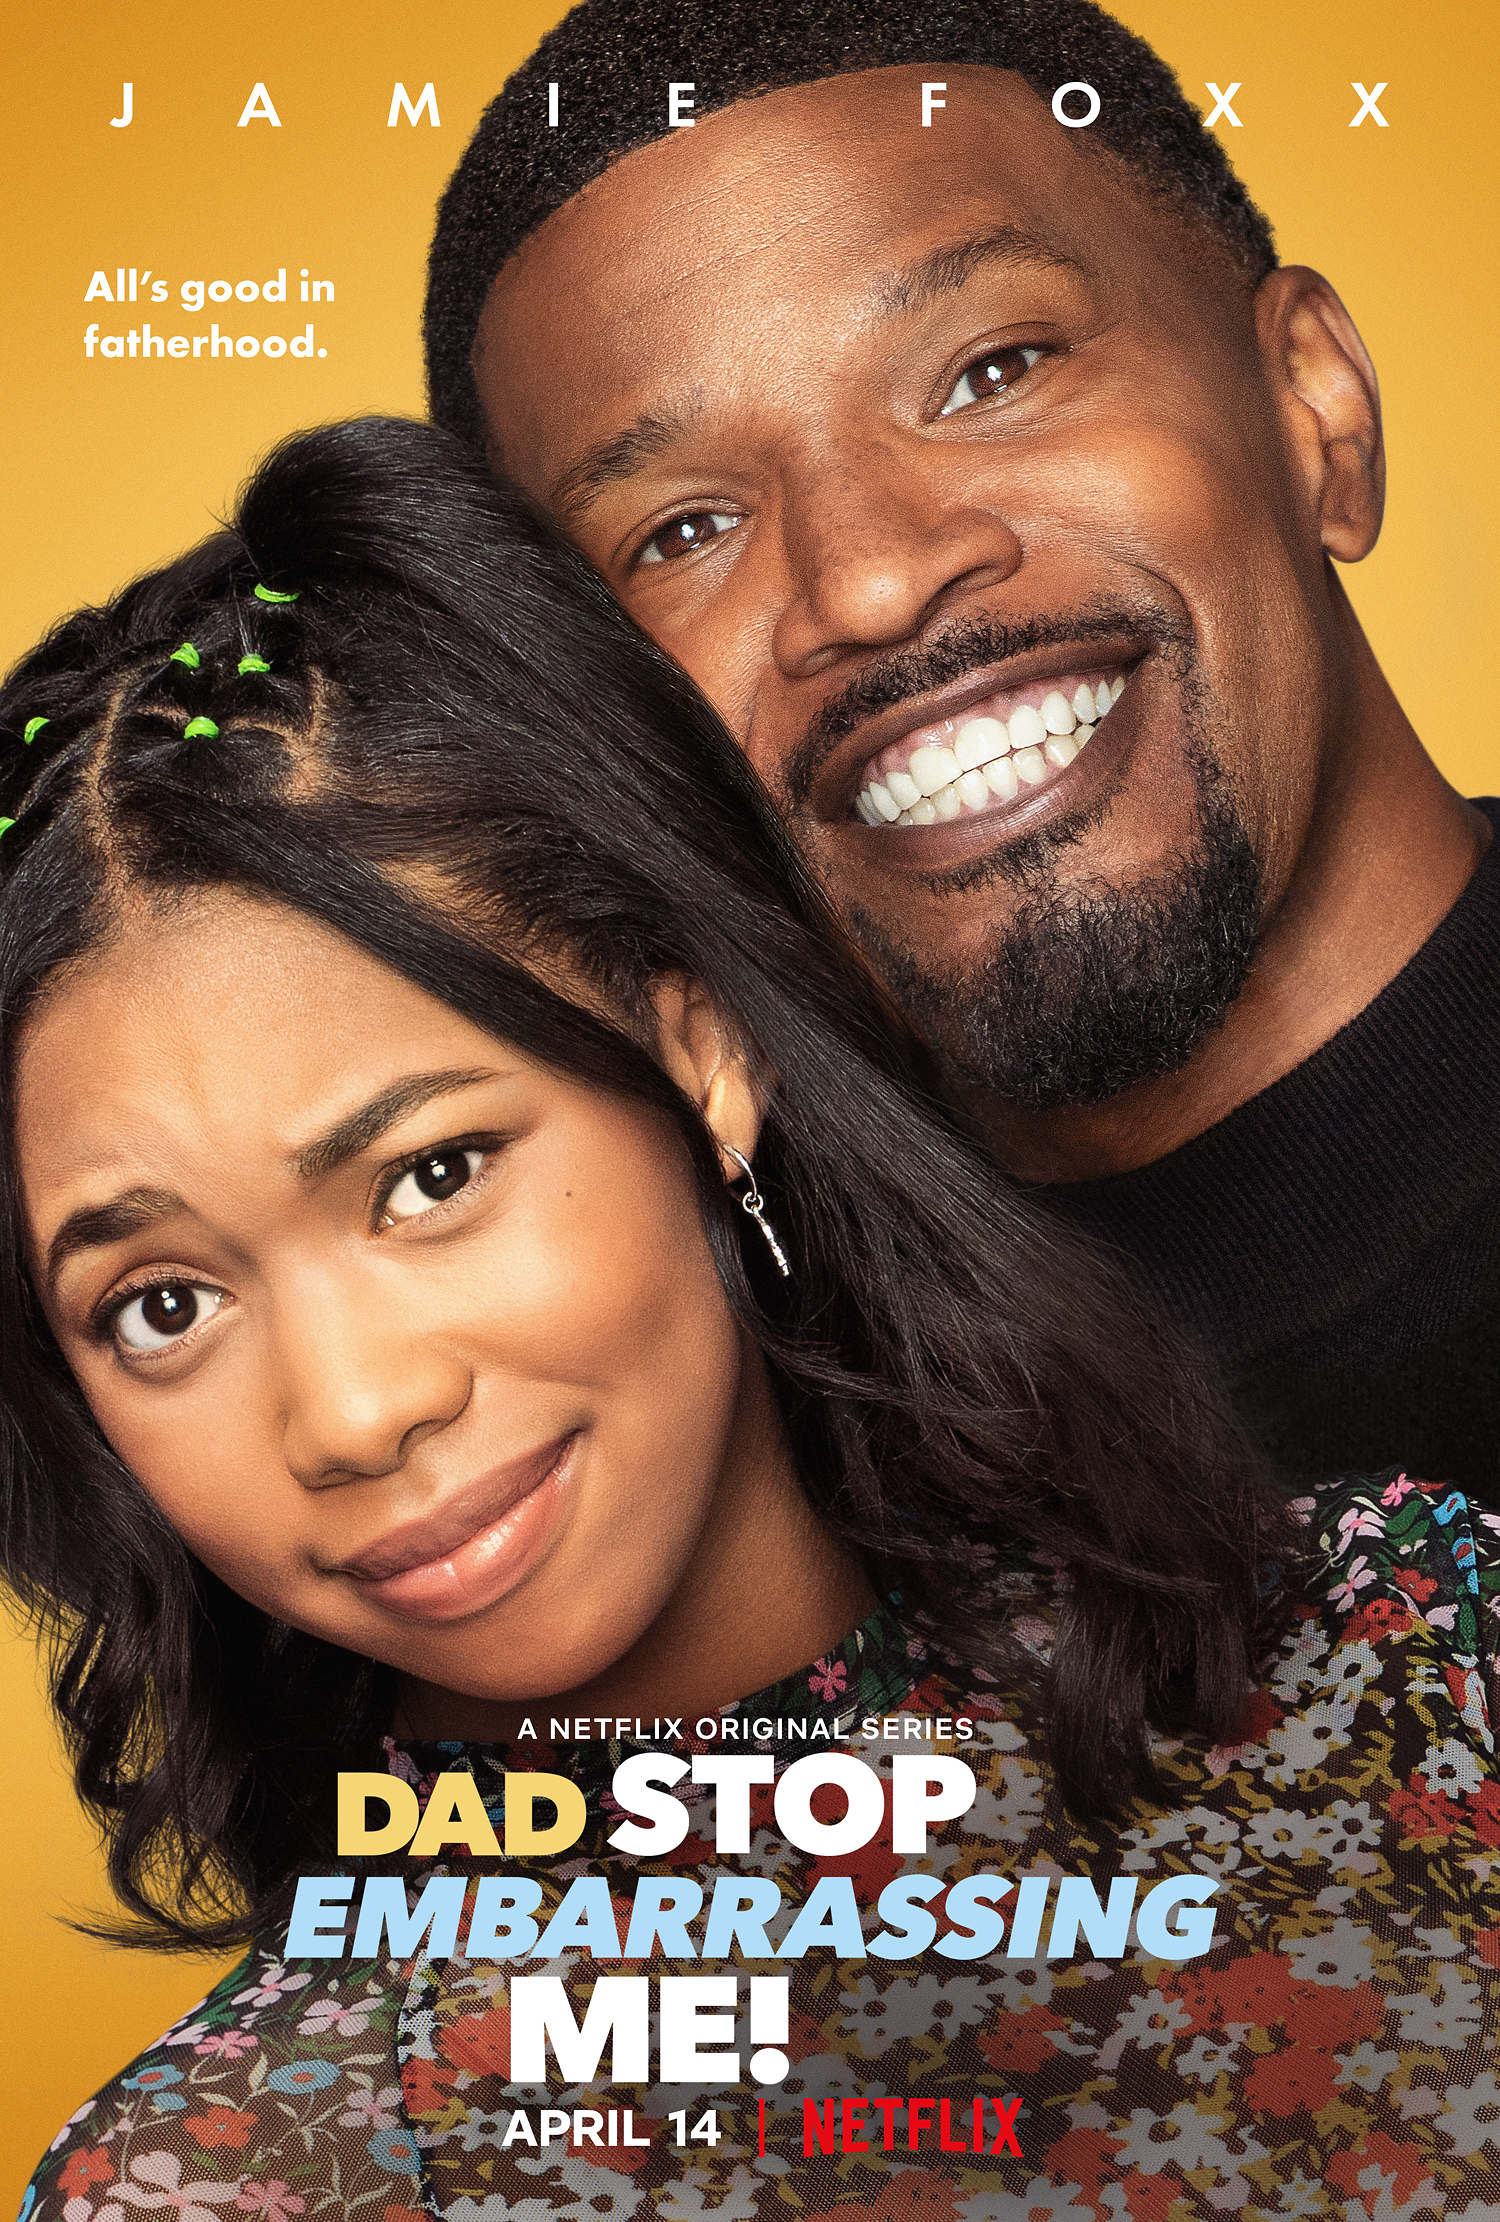 1st Trailer For Netflix Original Series 'Dad Stop Embarrassing Me!' Starring Jamie Foxx